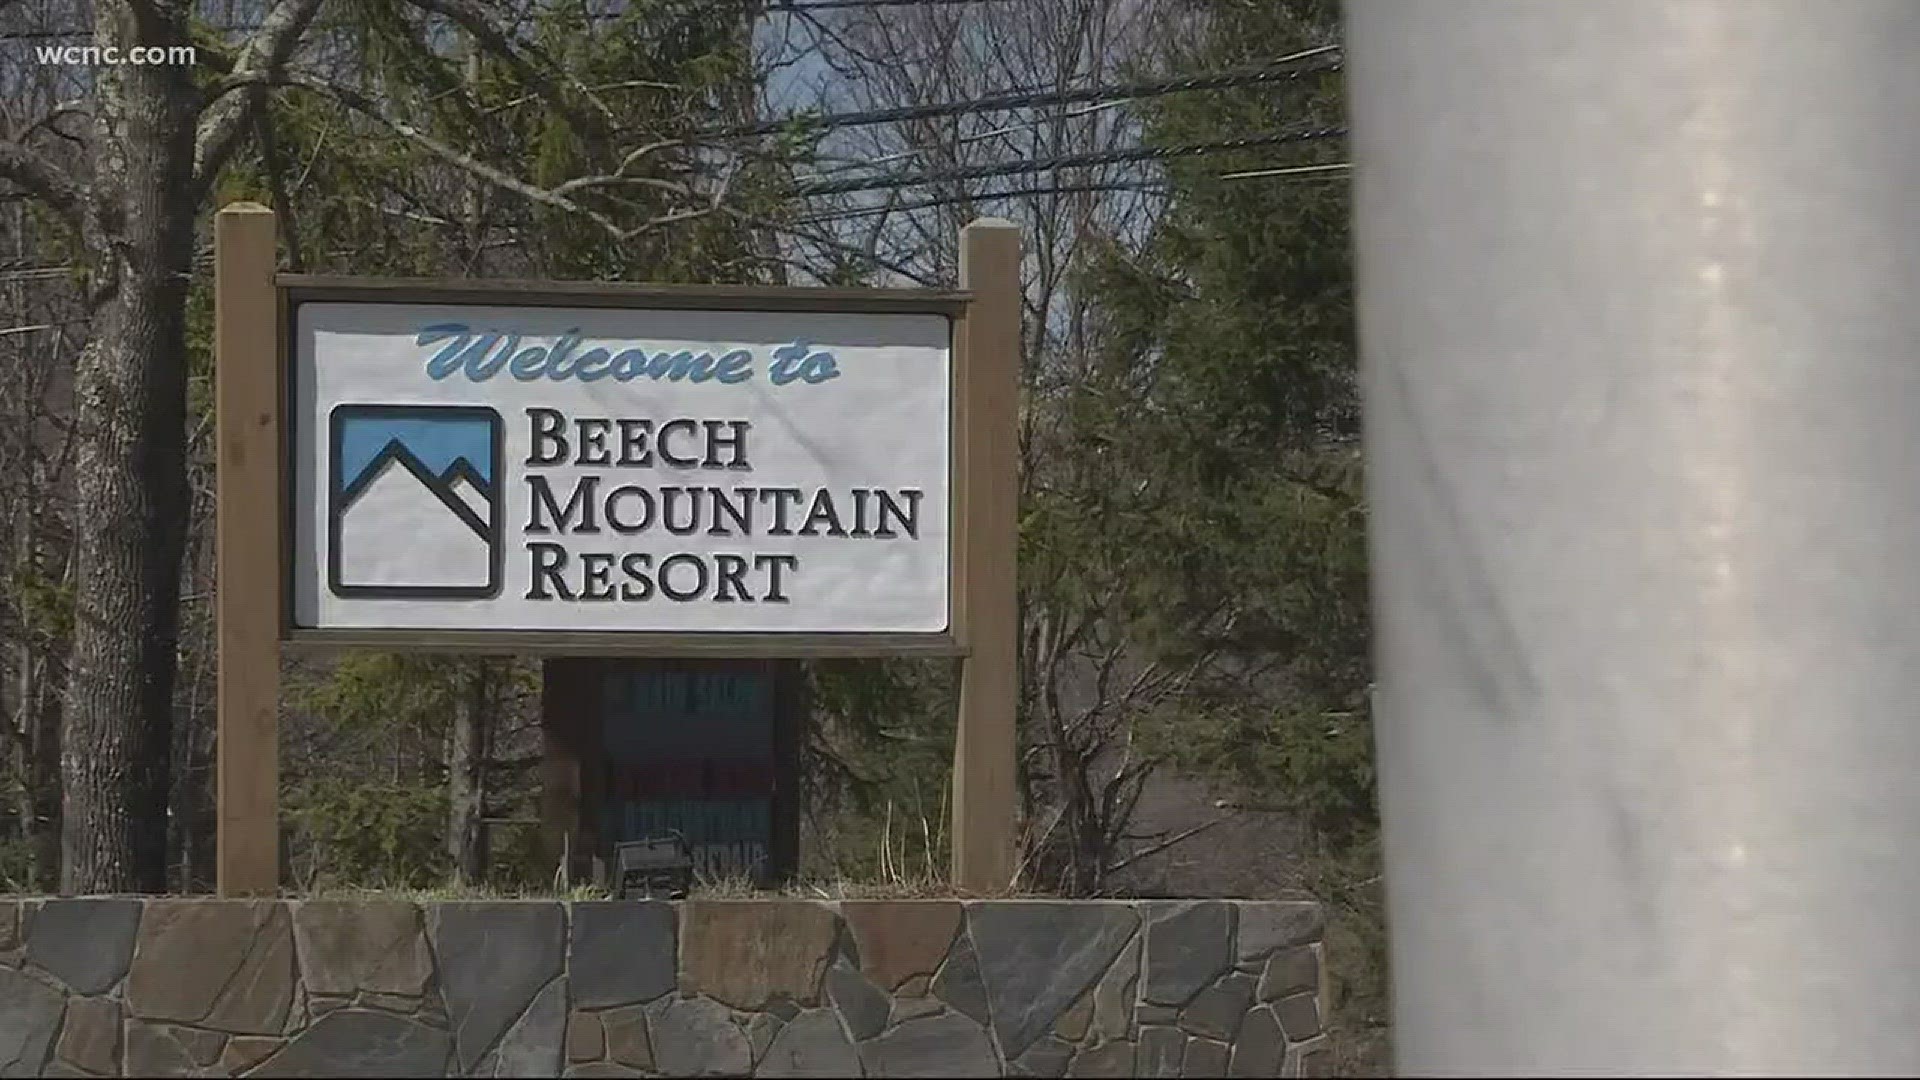 Beech Mountain Ski Resort announced it's closing for the season on Saturday